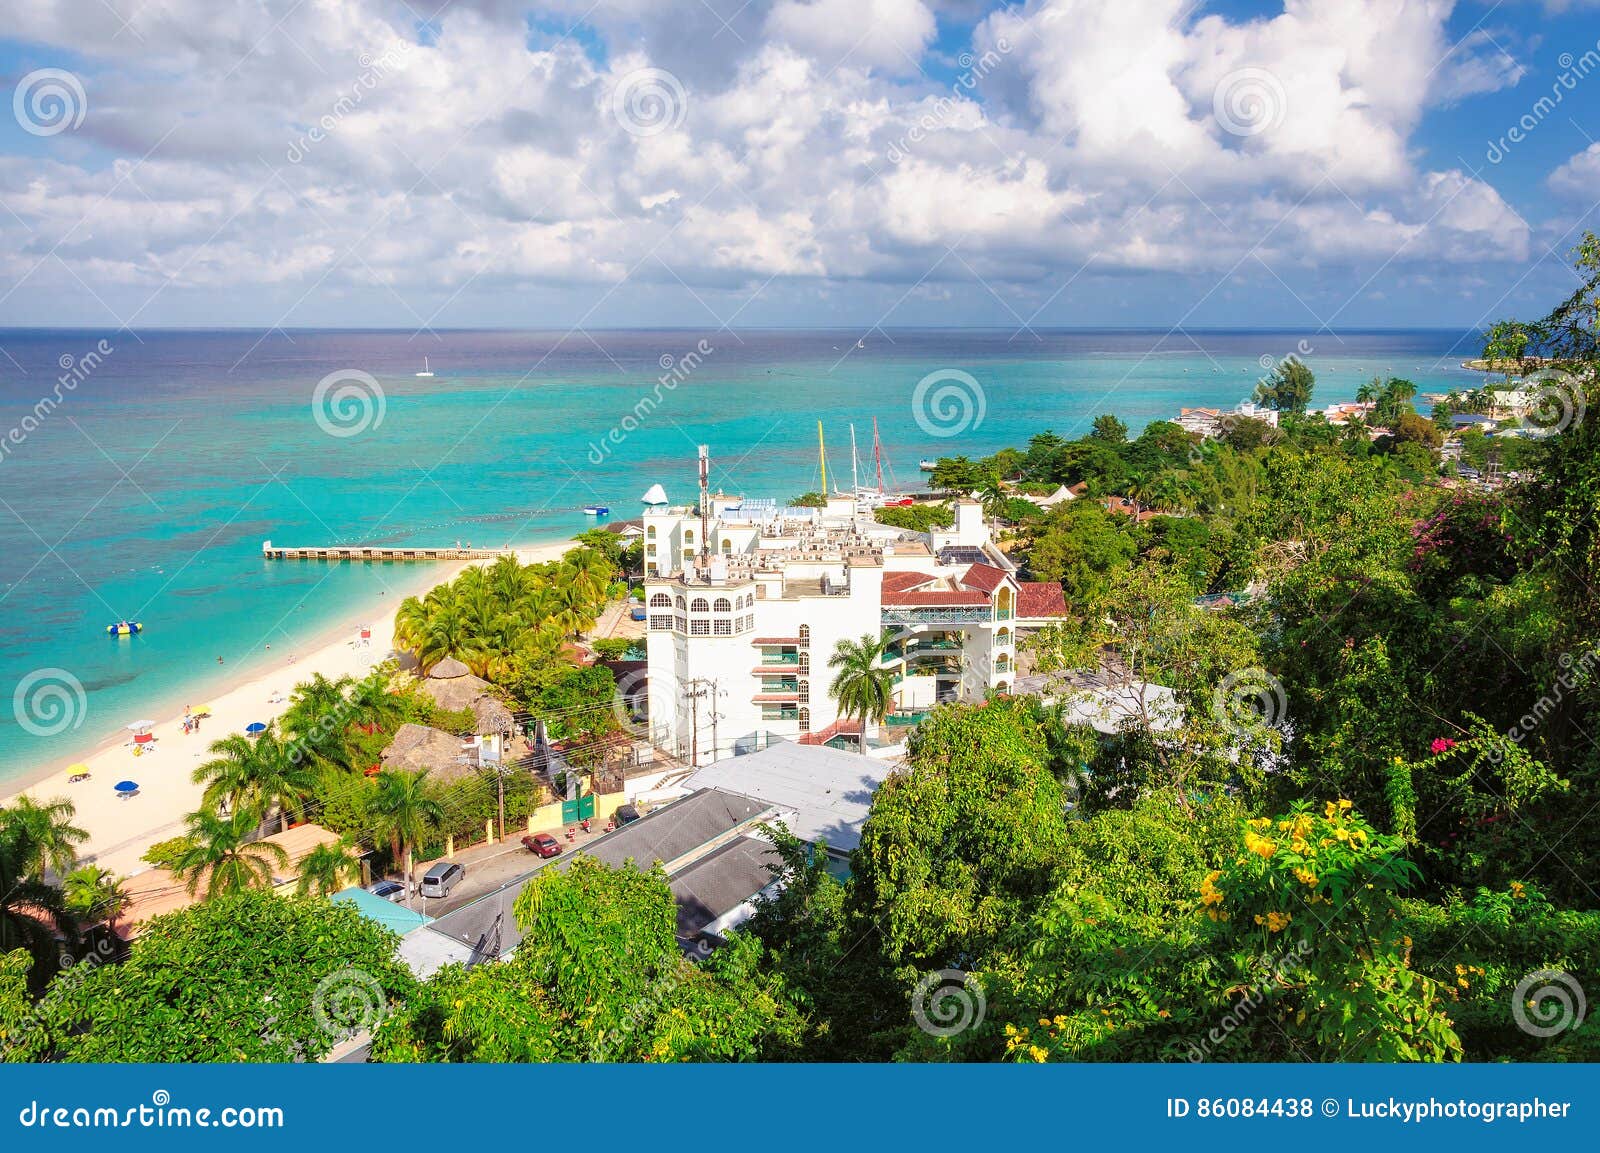 10,838 Jamaica Beach Stock Photos pic